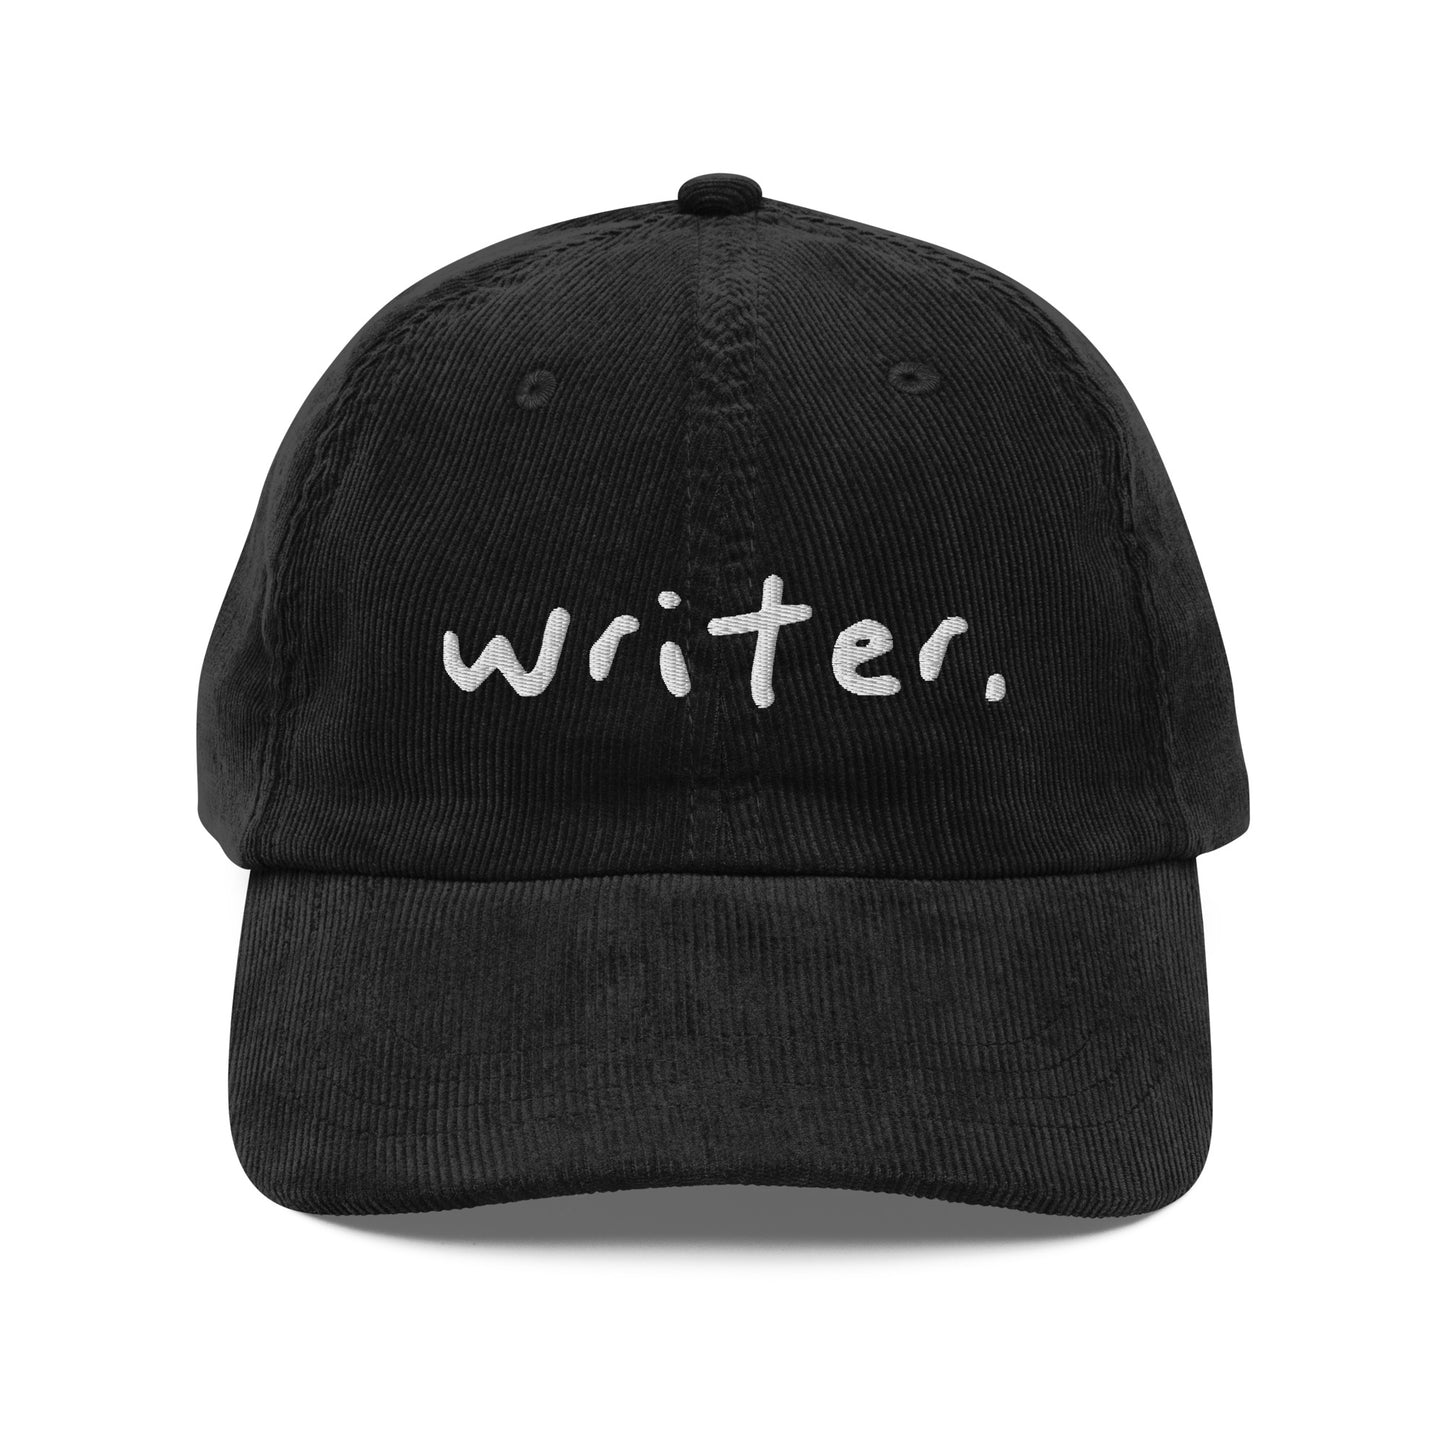 writer. vintage corduroy cap